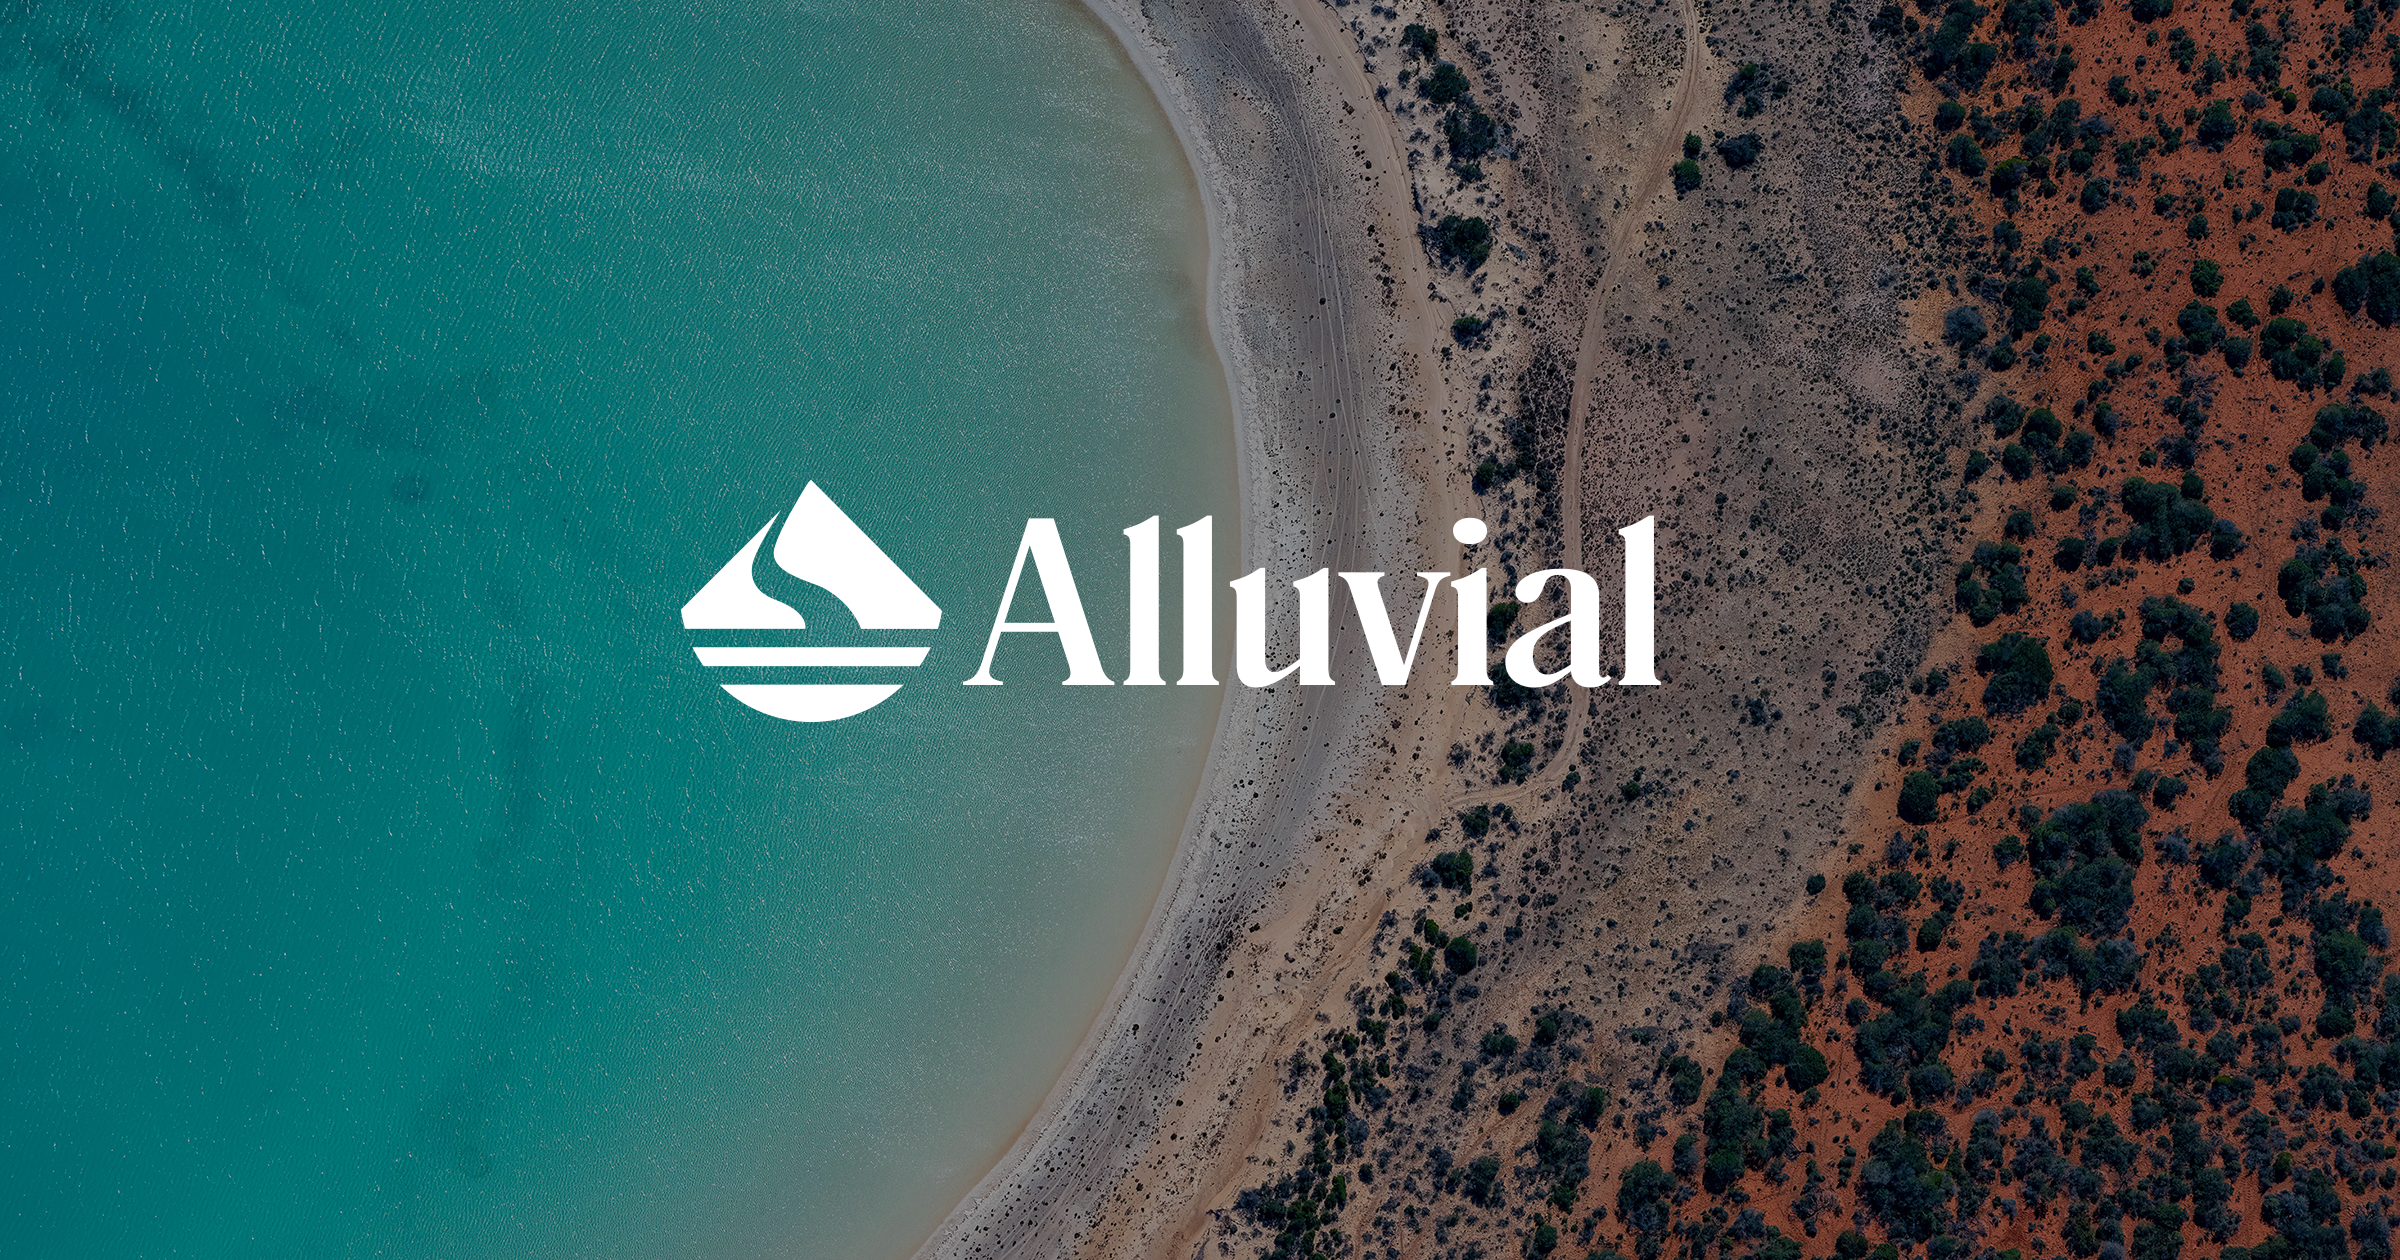 Alluvial Team Forms to Build an Enterprise-grade Liquid Staking Standard